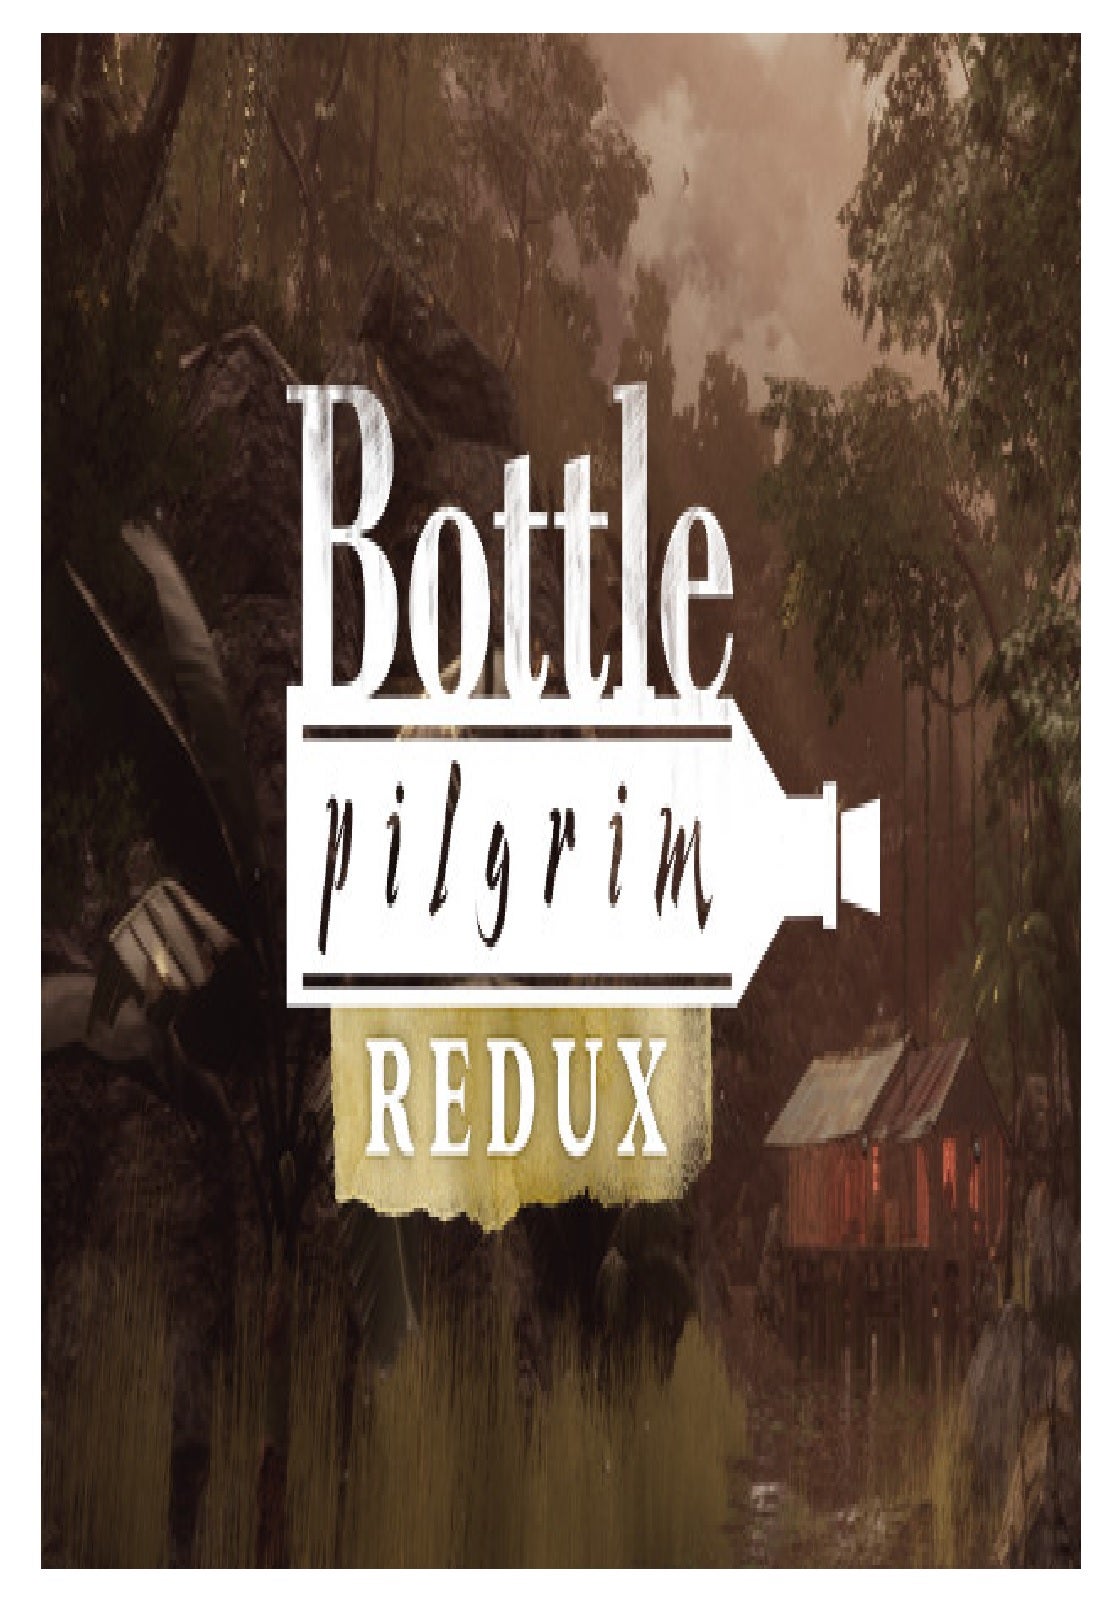 Tonguc Bodur Bottle Pilgrim Redux PC Game